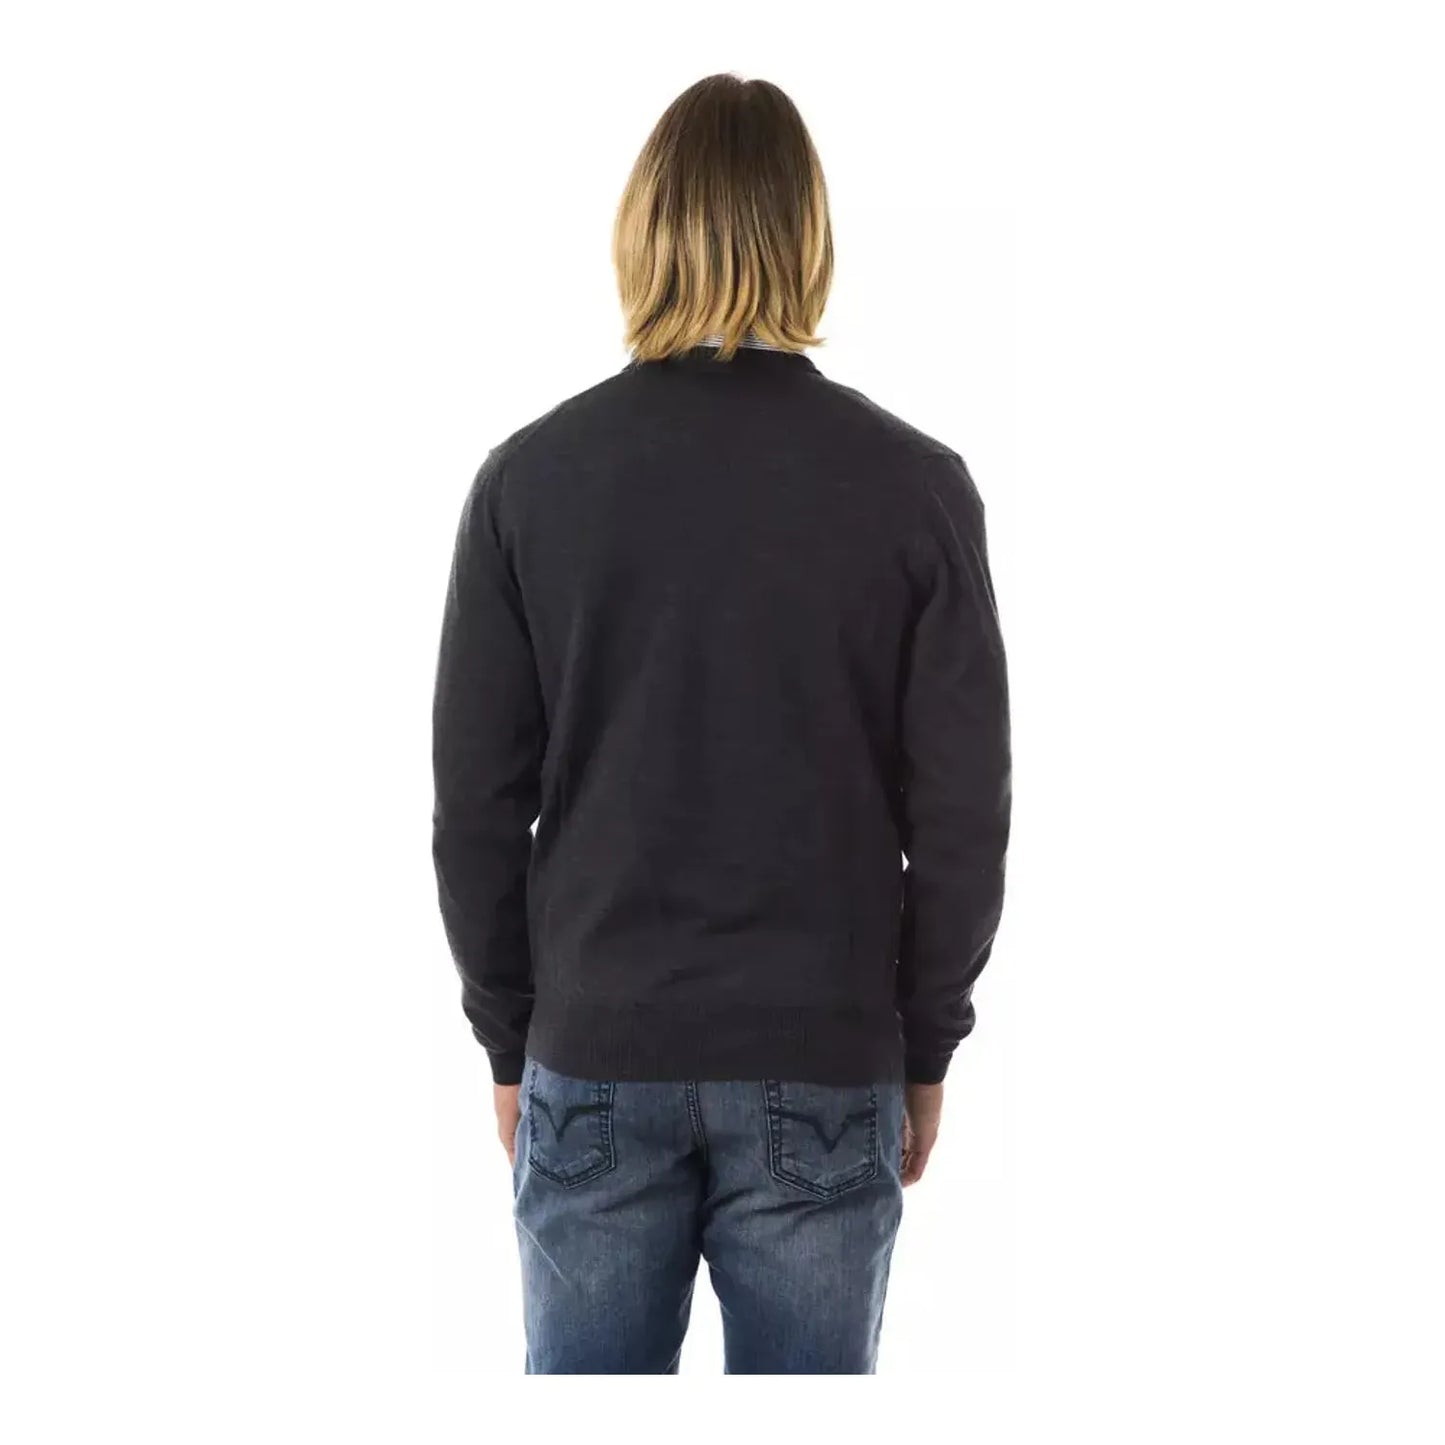 Uominitaliani V-Neck Extrafine Merino Wool Sweater antr-sweater-1